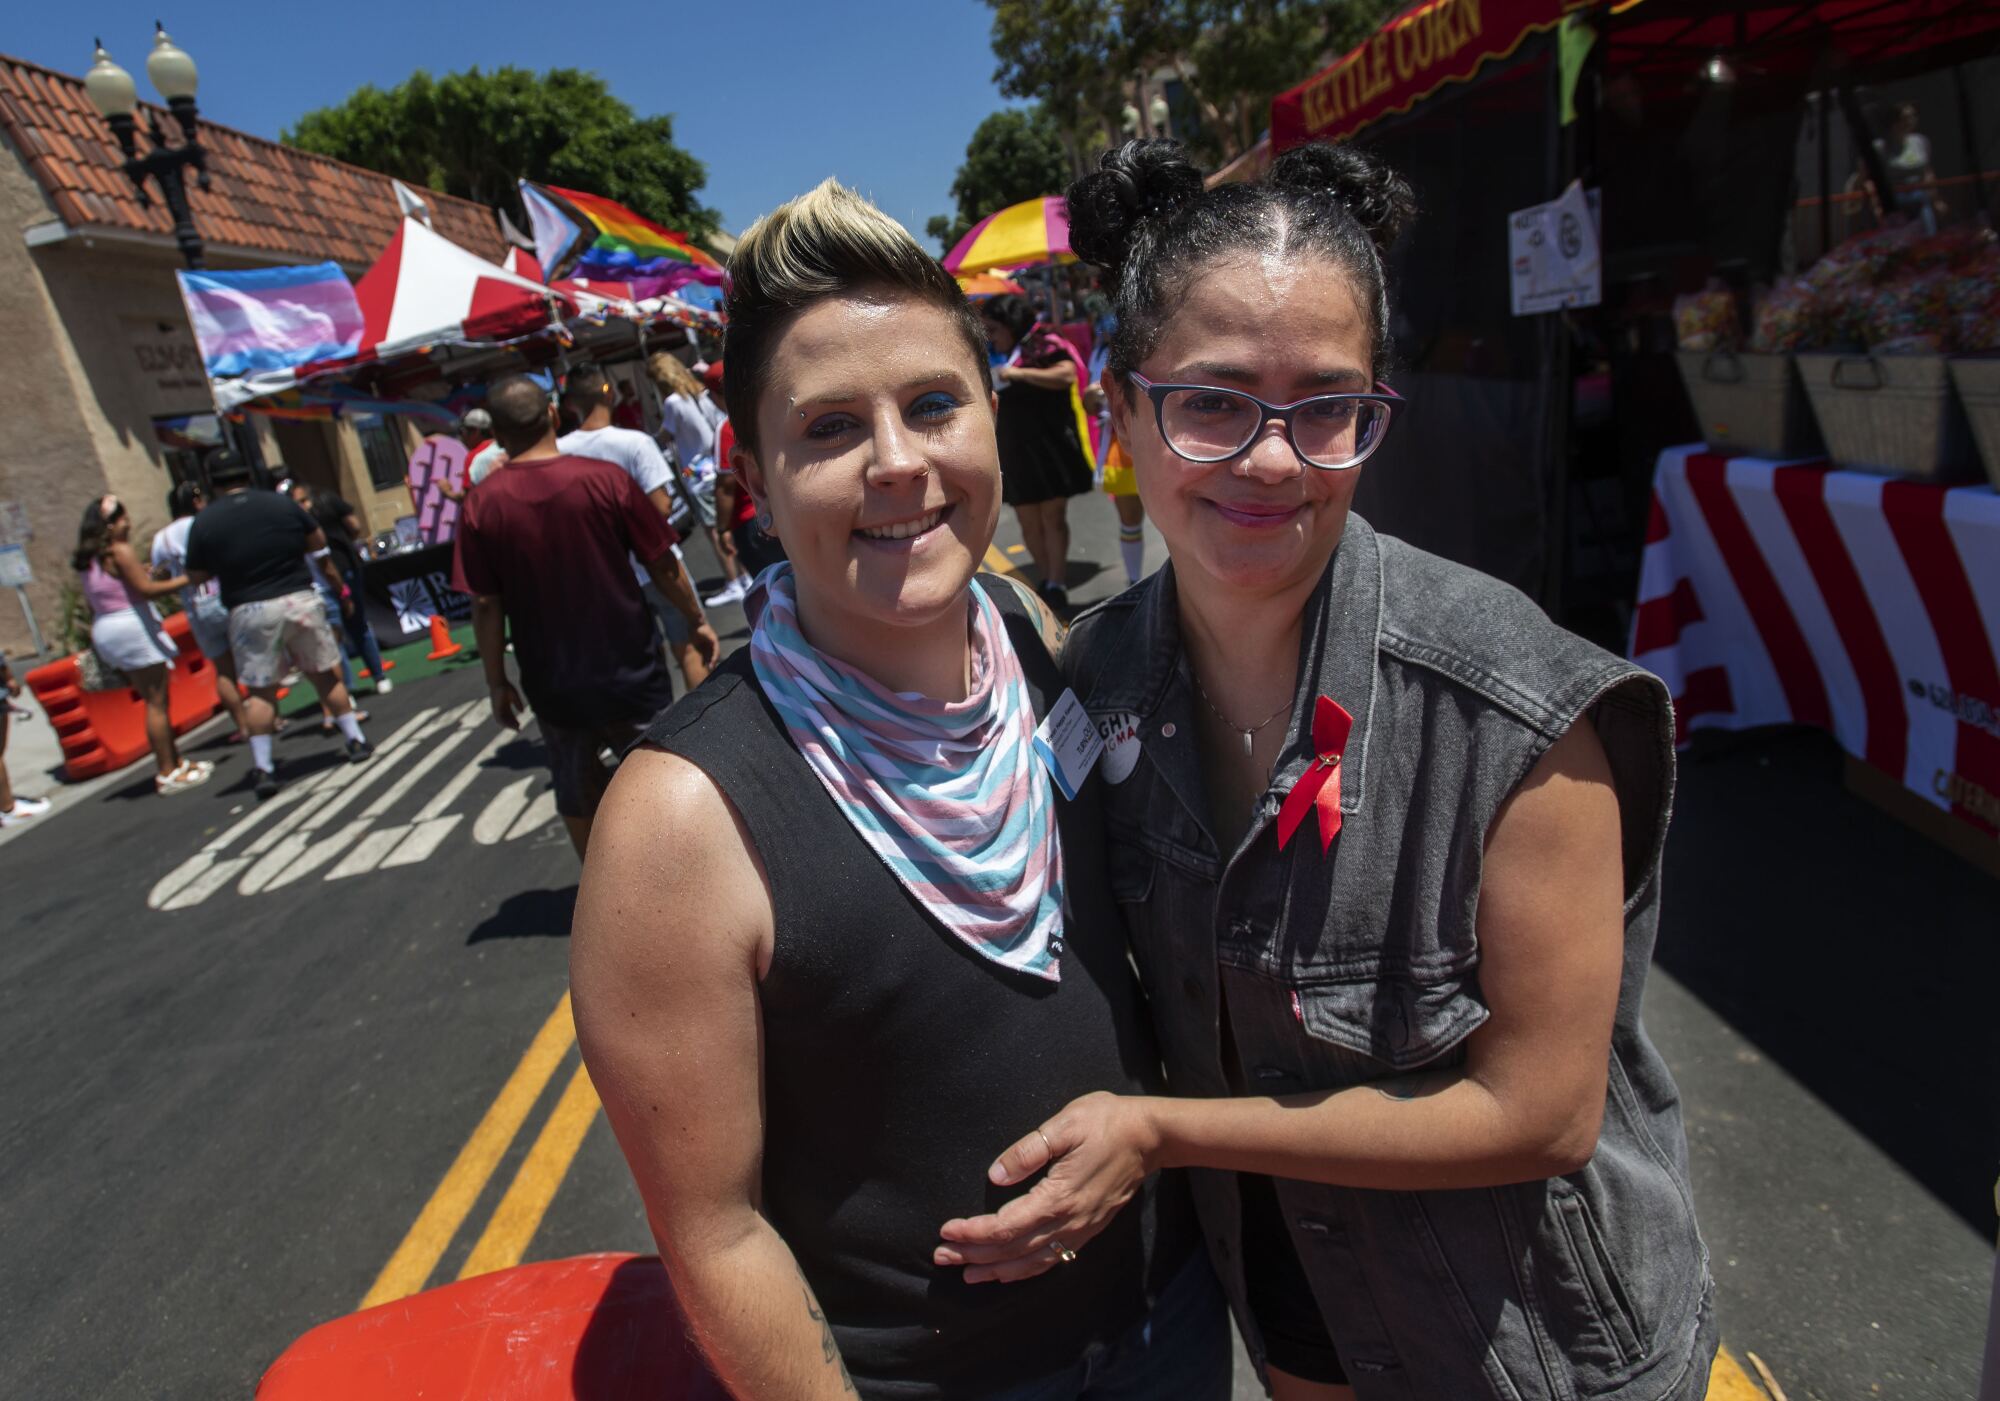 Rowan Hepps Keeney, left, and her partner, Yashia Garcia, at the festival in Santa Ana.